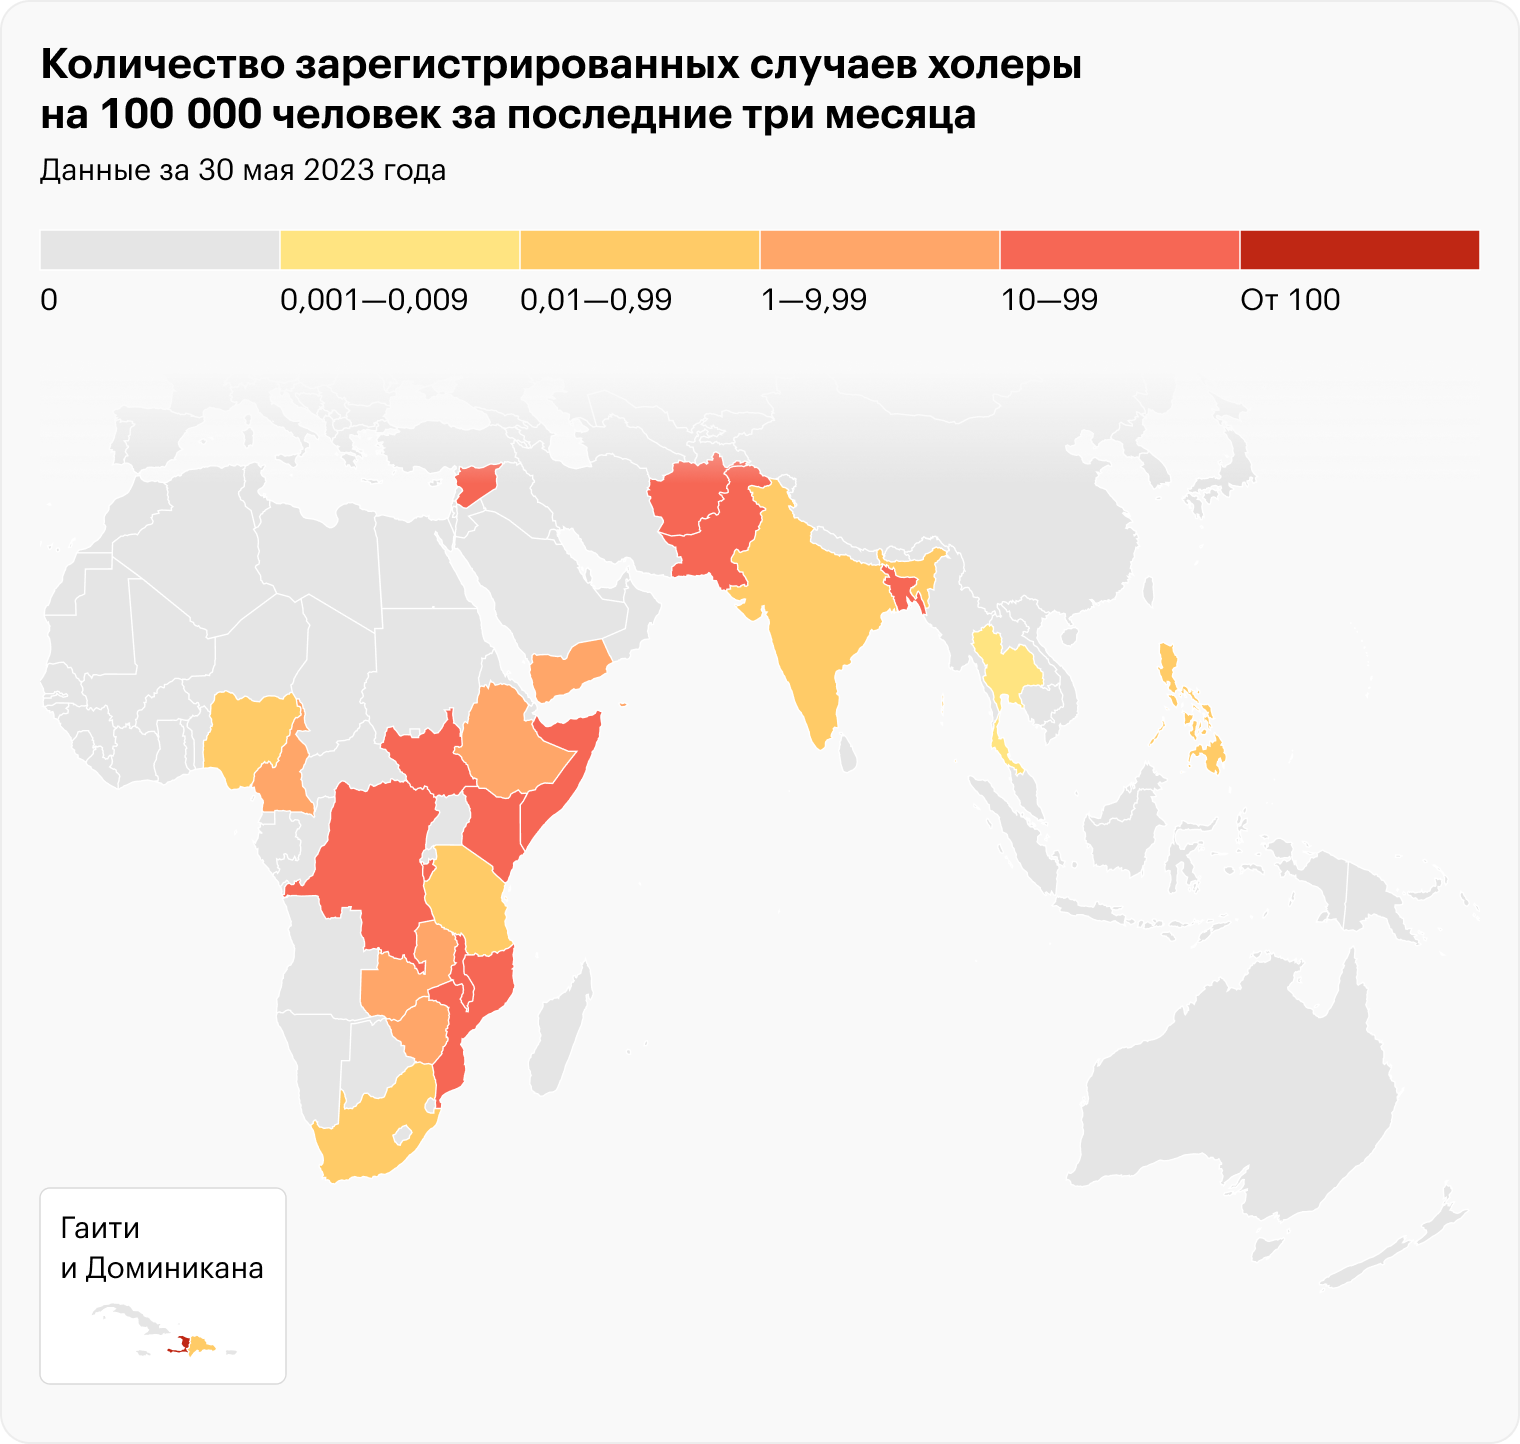 На борту холера бело синий флаг. Холера статистика. Холера карта. Статистика холеры в России.